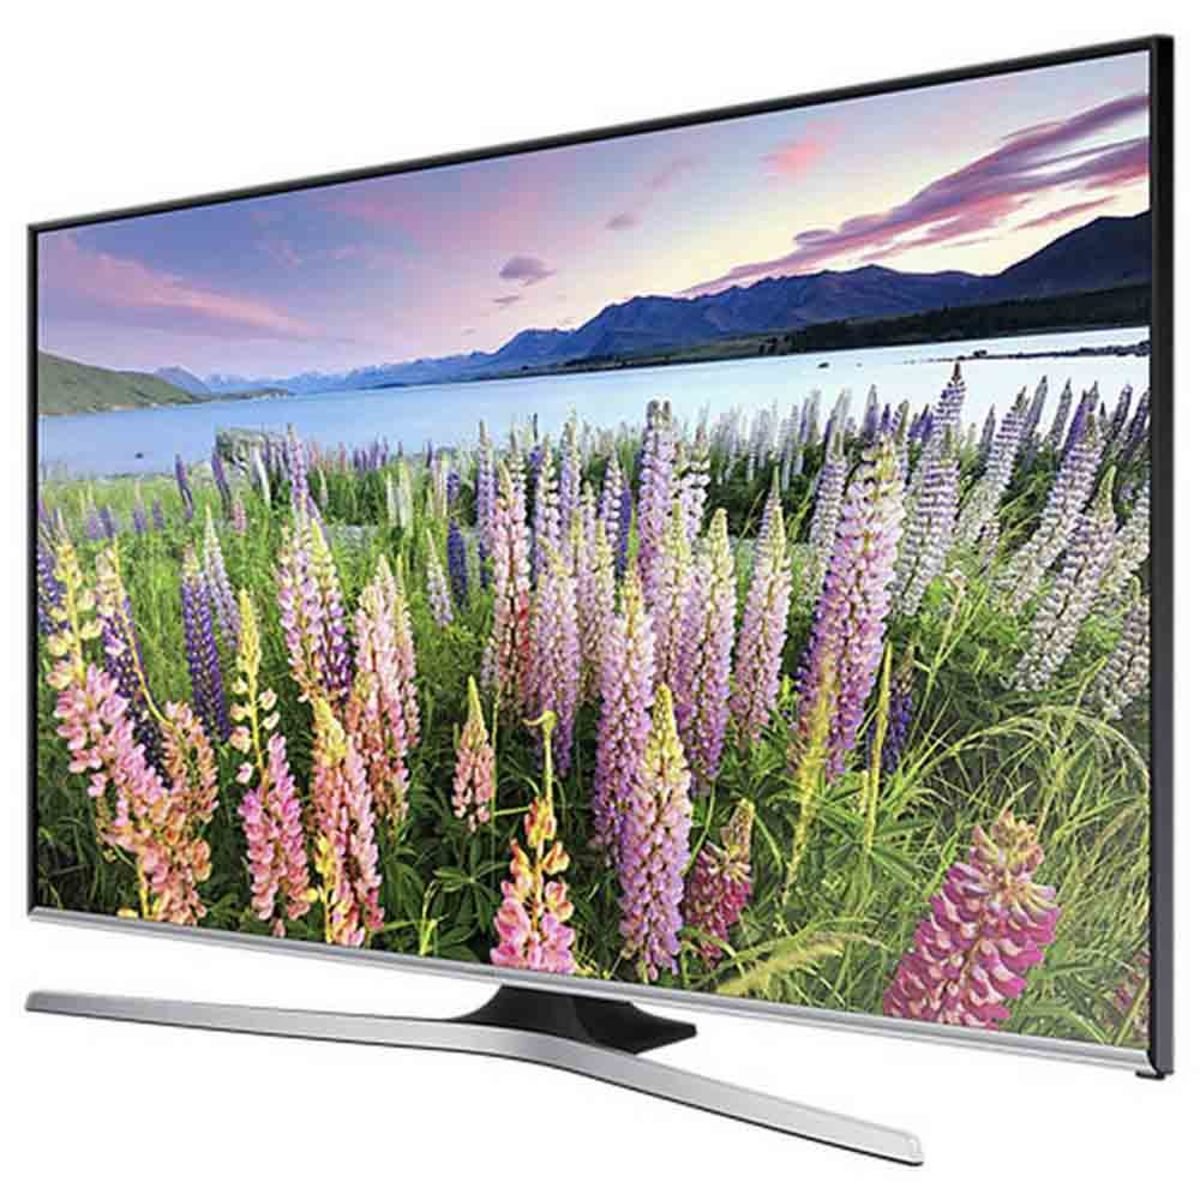 Samsung Smart LED TV UA40J5500AR 40inch